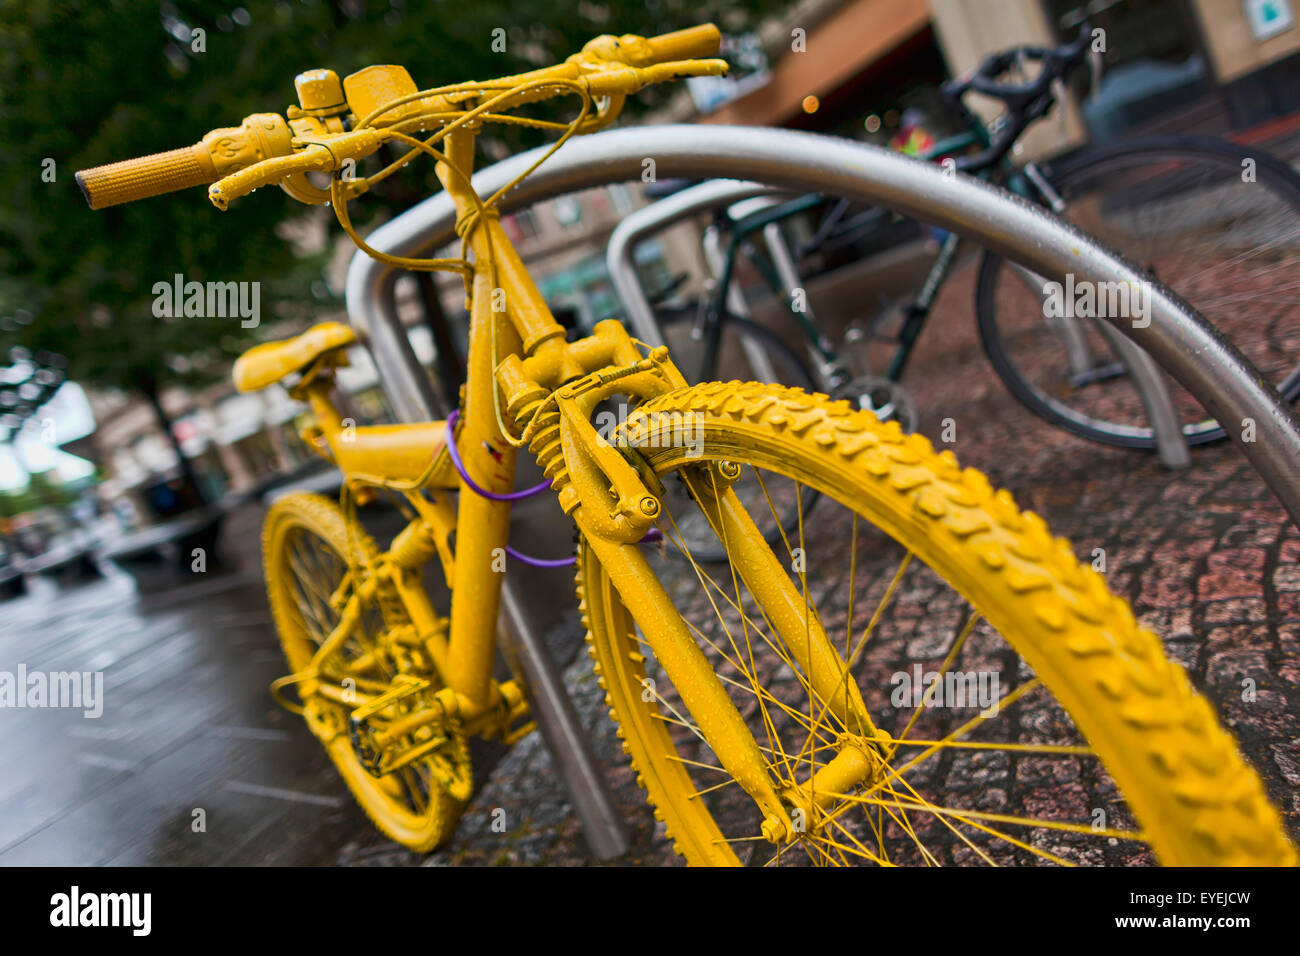 Gelbes Fahrrad, Symbol für die Tour de France; Sheffield, England  Stockfotografie - Alamy